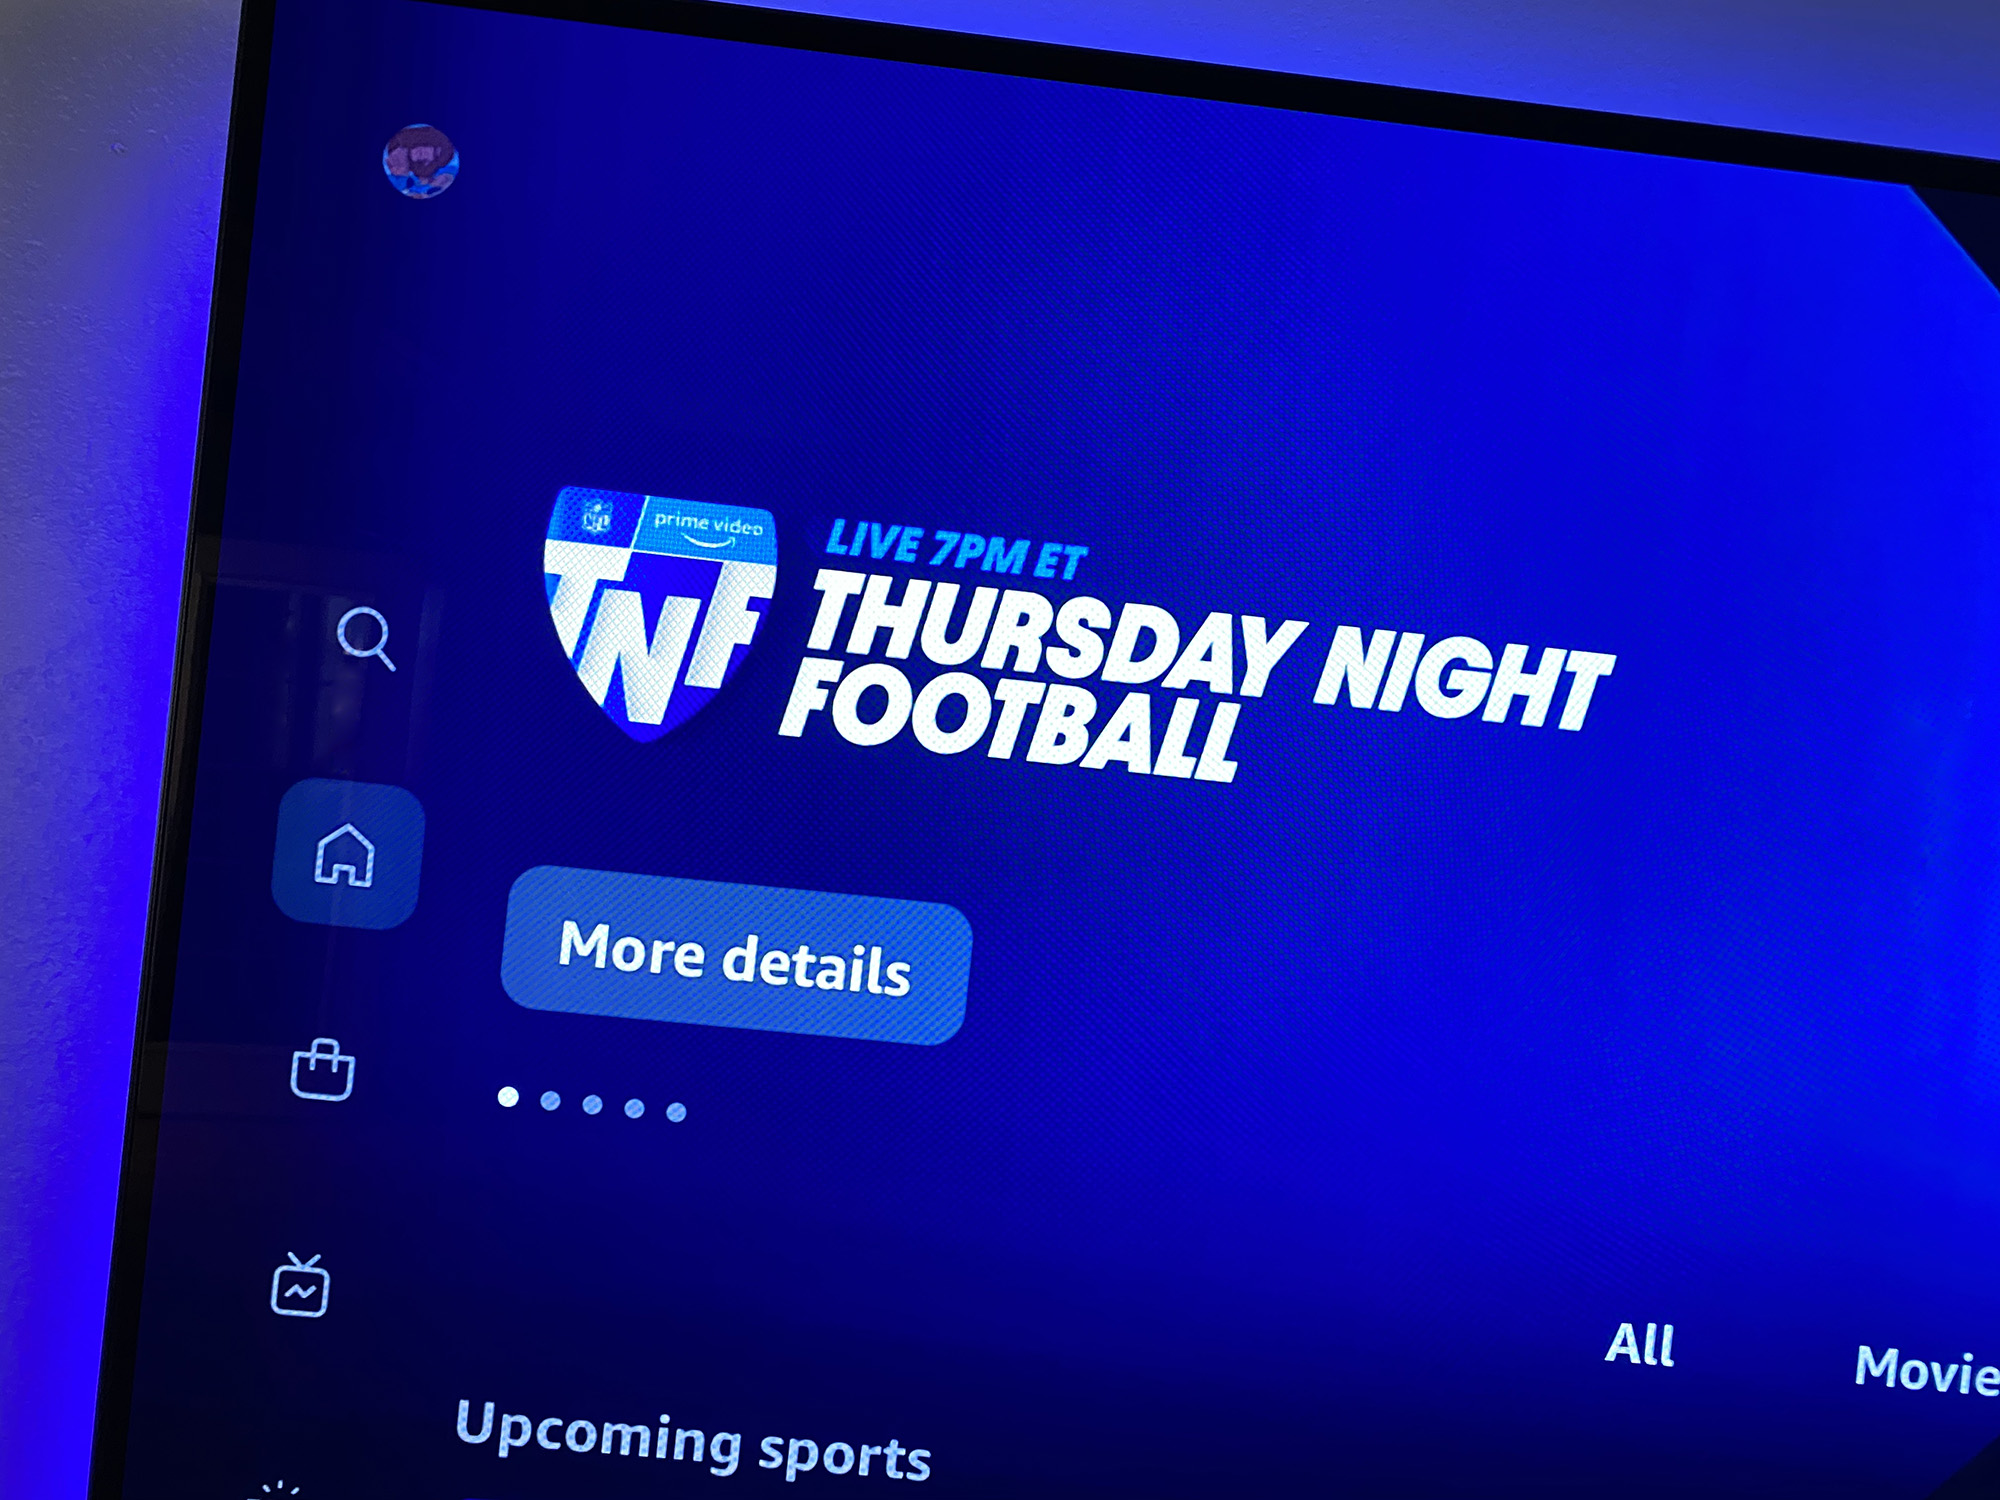 Amazon Prime Video still needs to fix its Thursday Night Football stream Digital Trends